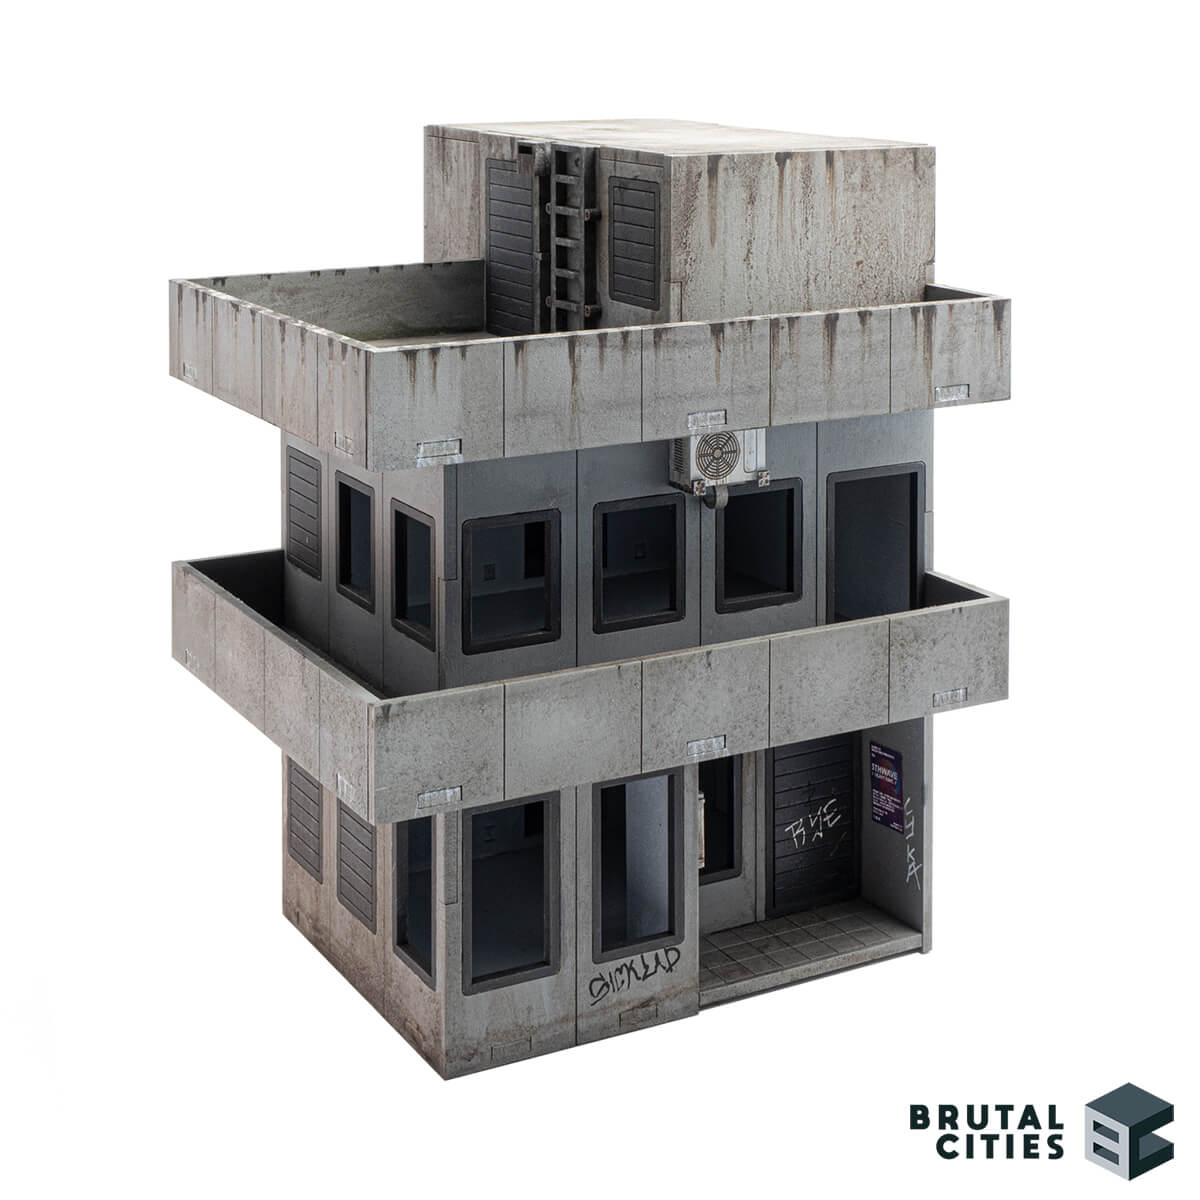 Brutalist miniature wargaming terrain model kit. Three storeys with balconies.